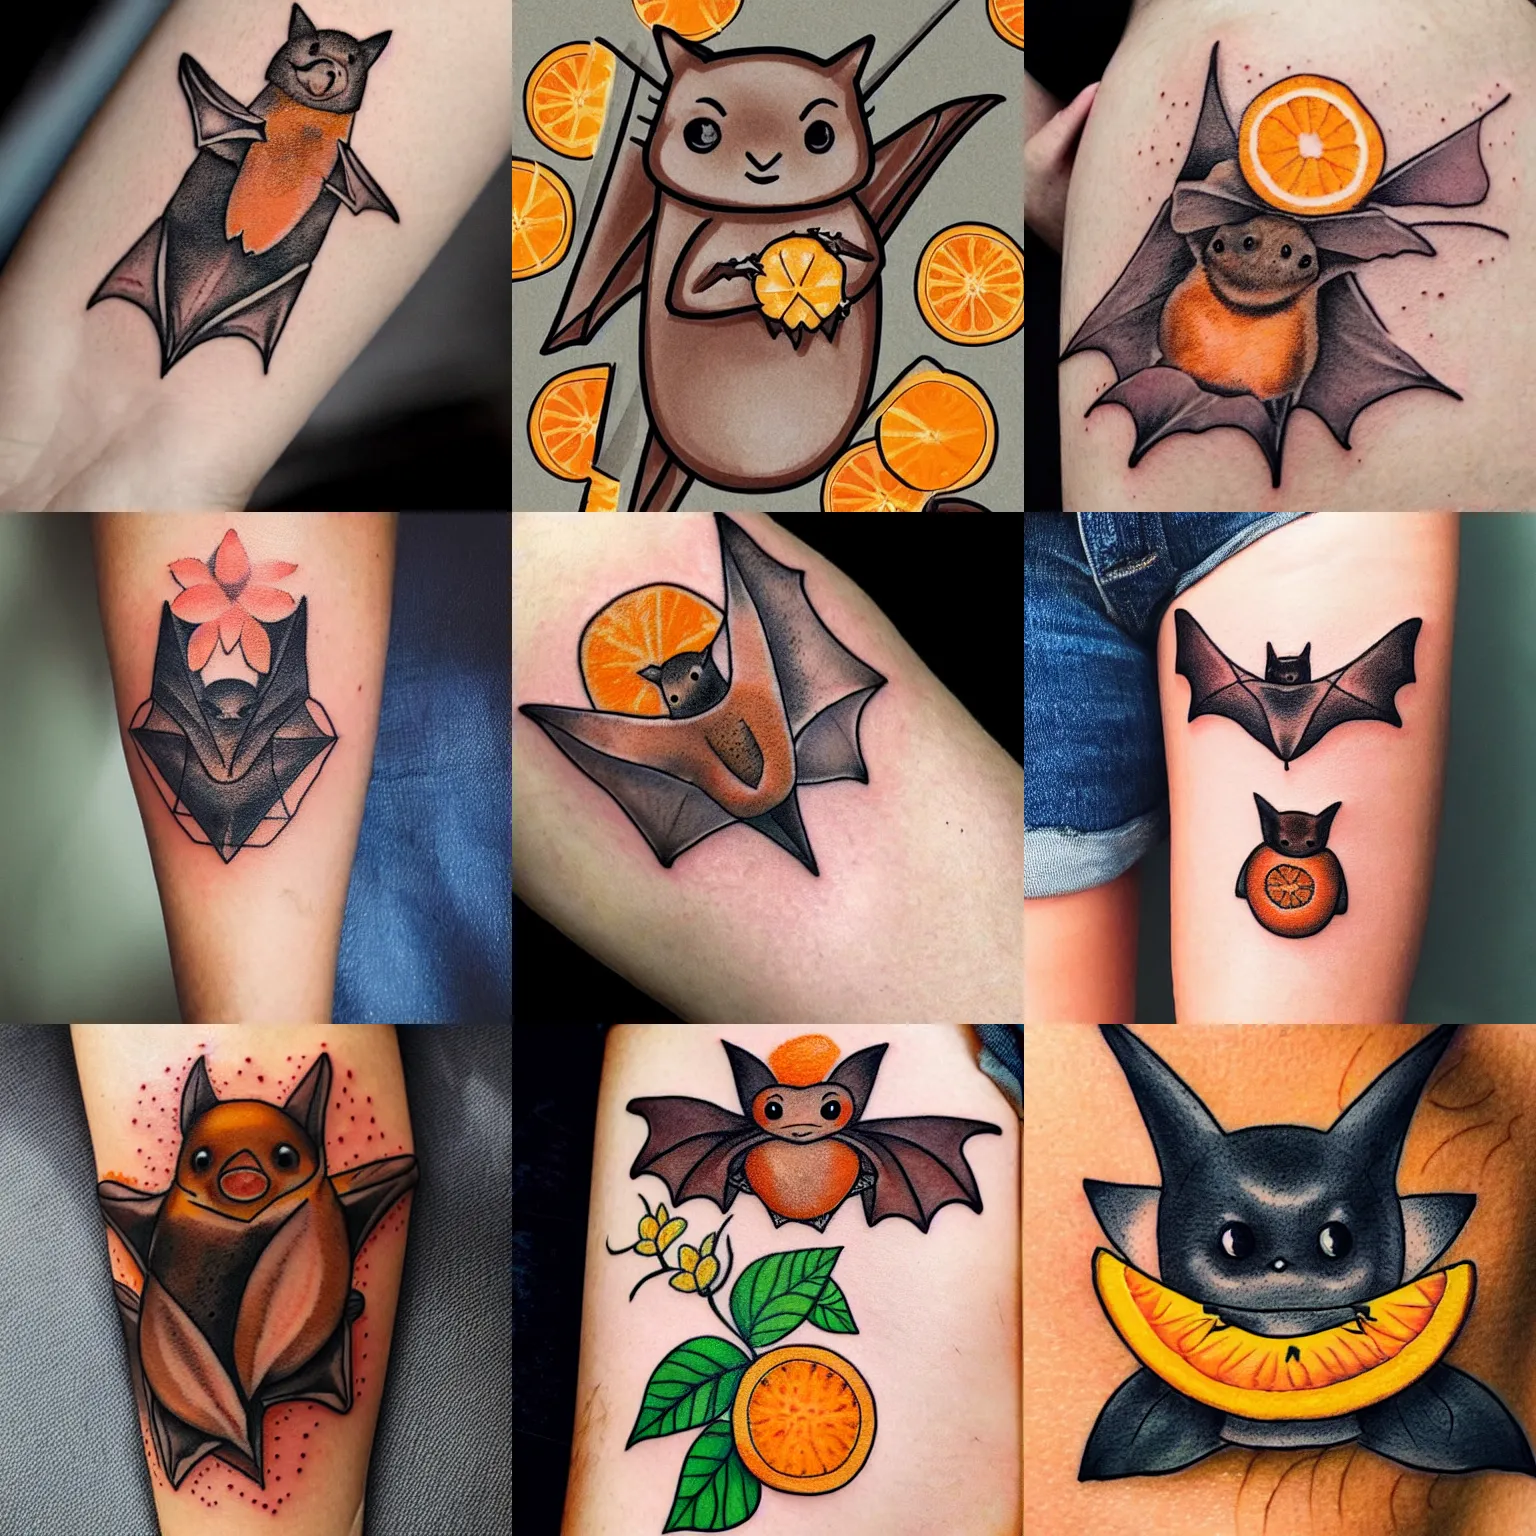 orangeblossom in Tattoos  Search in 13M Tattoos Now  Tattoodo